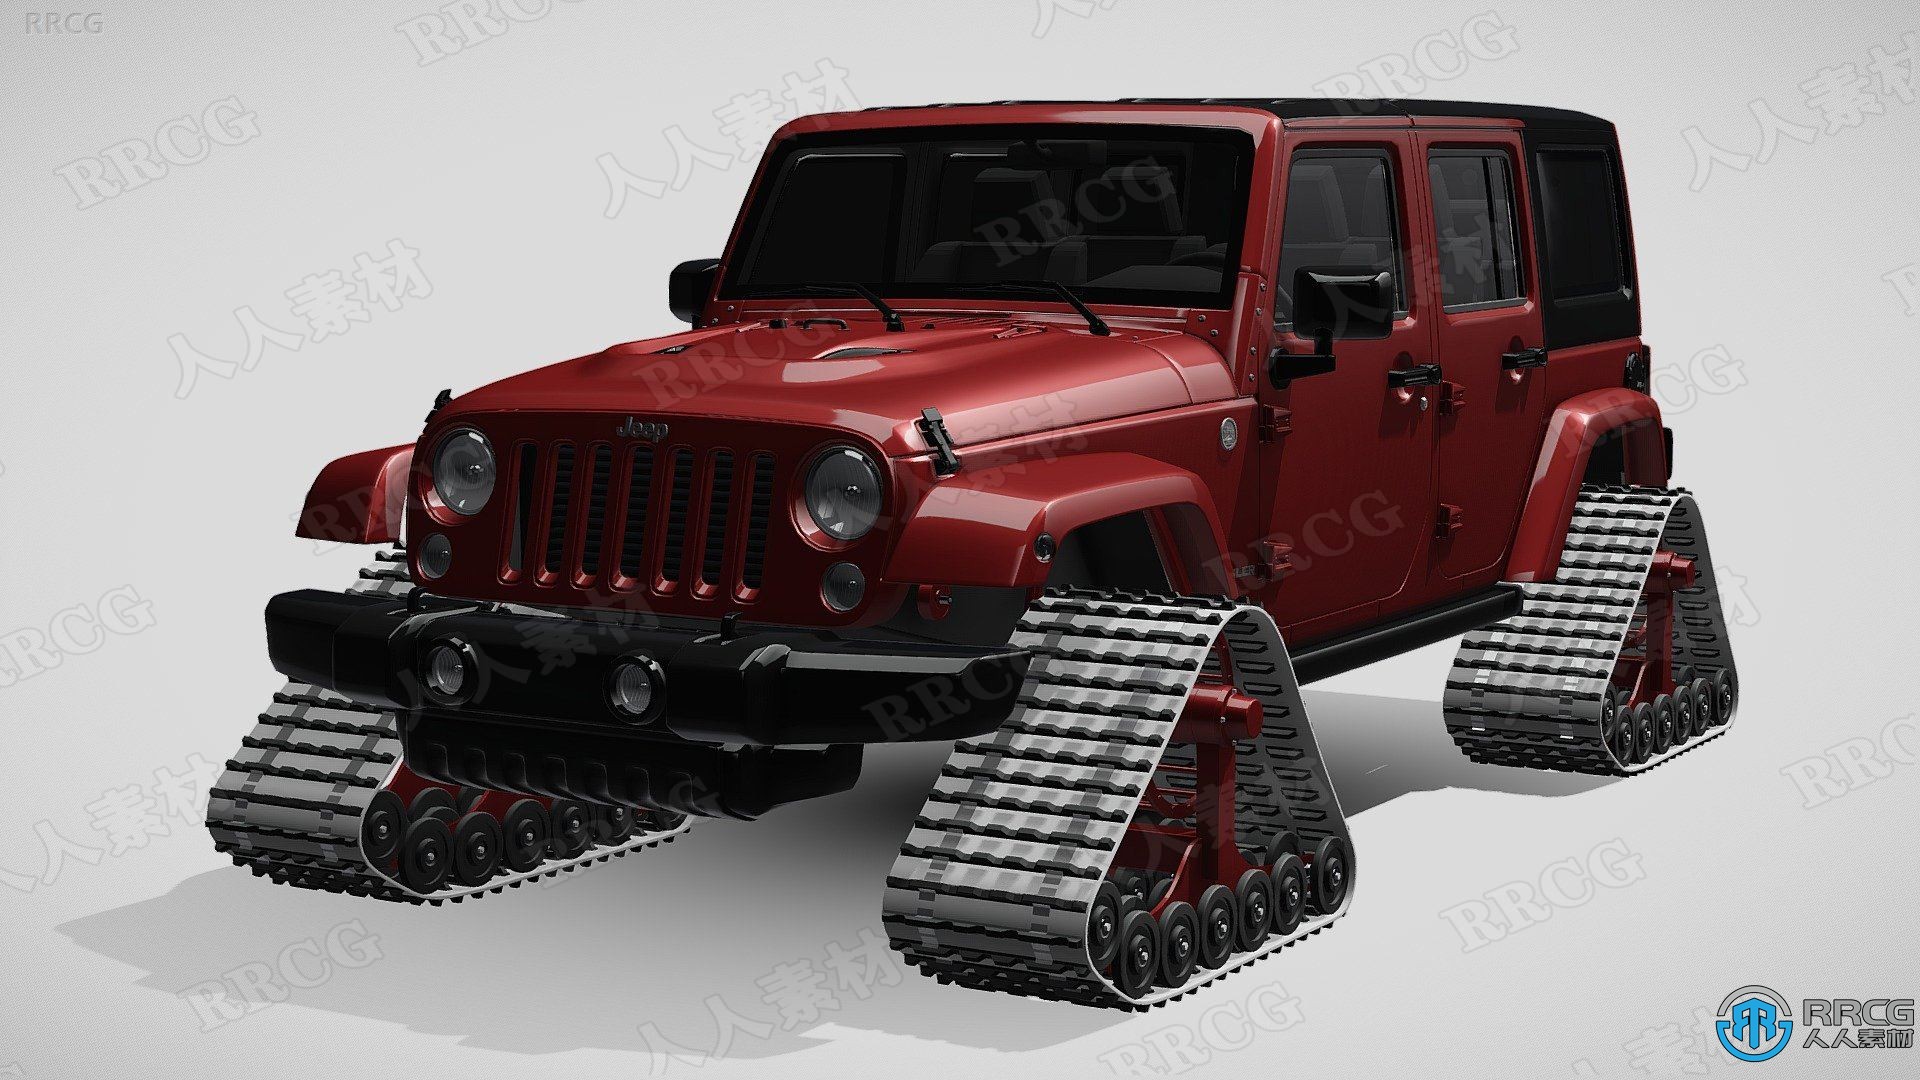 Sketchfab出品1000组各类汽车3D模型大合集